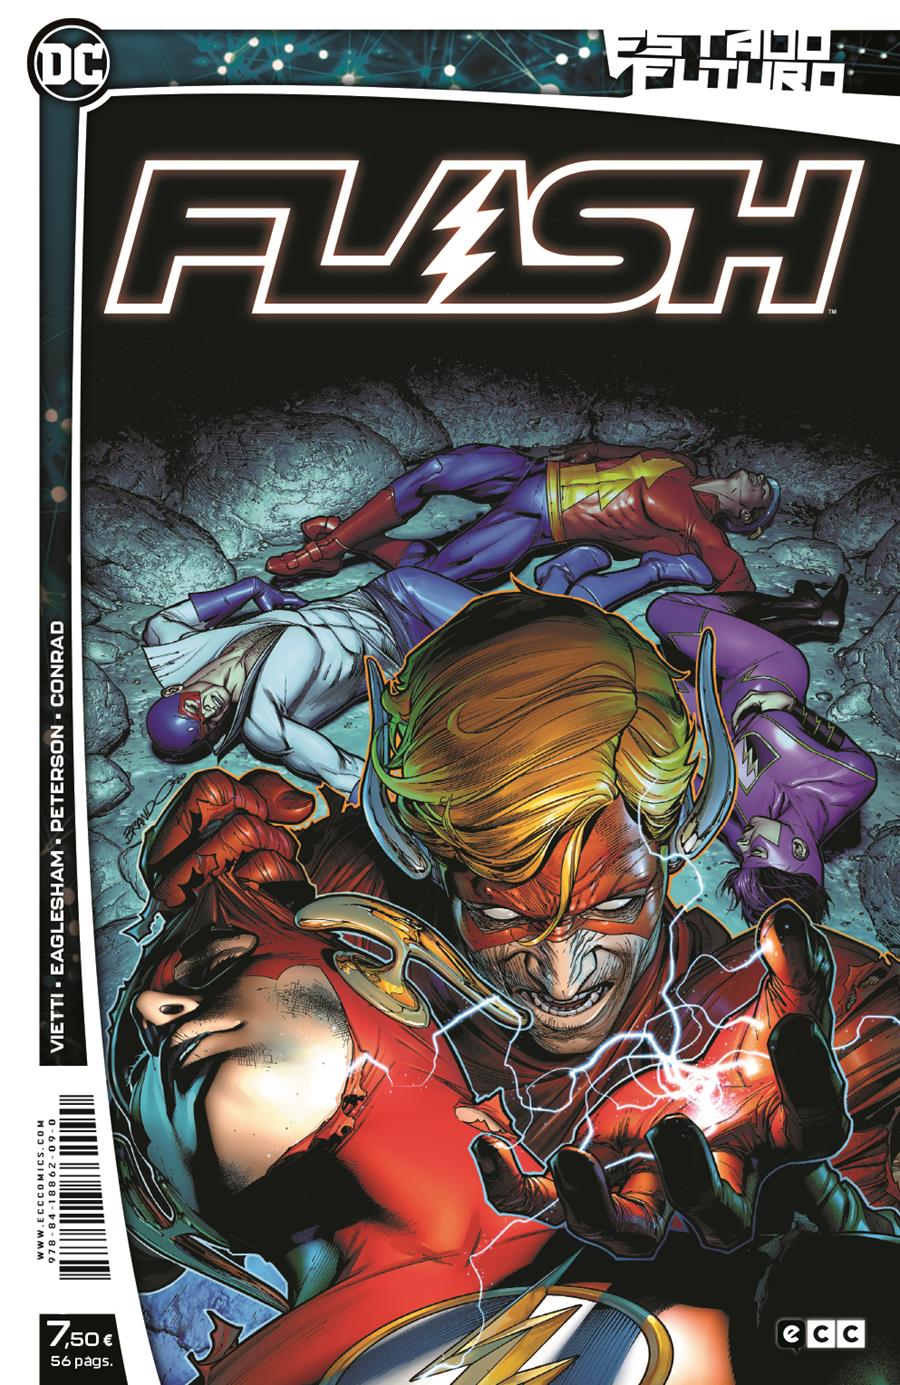 Estado Futuro: Flash | N0921-ECC13 | Varios autores | Terra de Còmic - Tu tienda de cómics online especializada en cómics, manga y merchandising